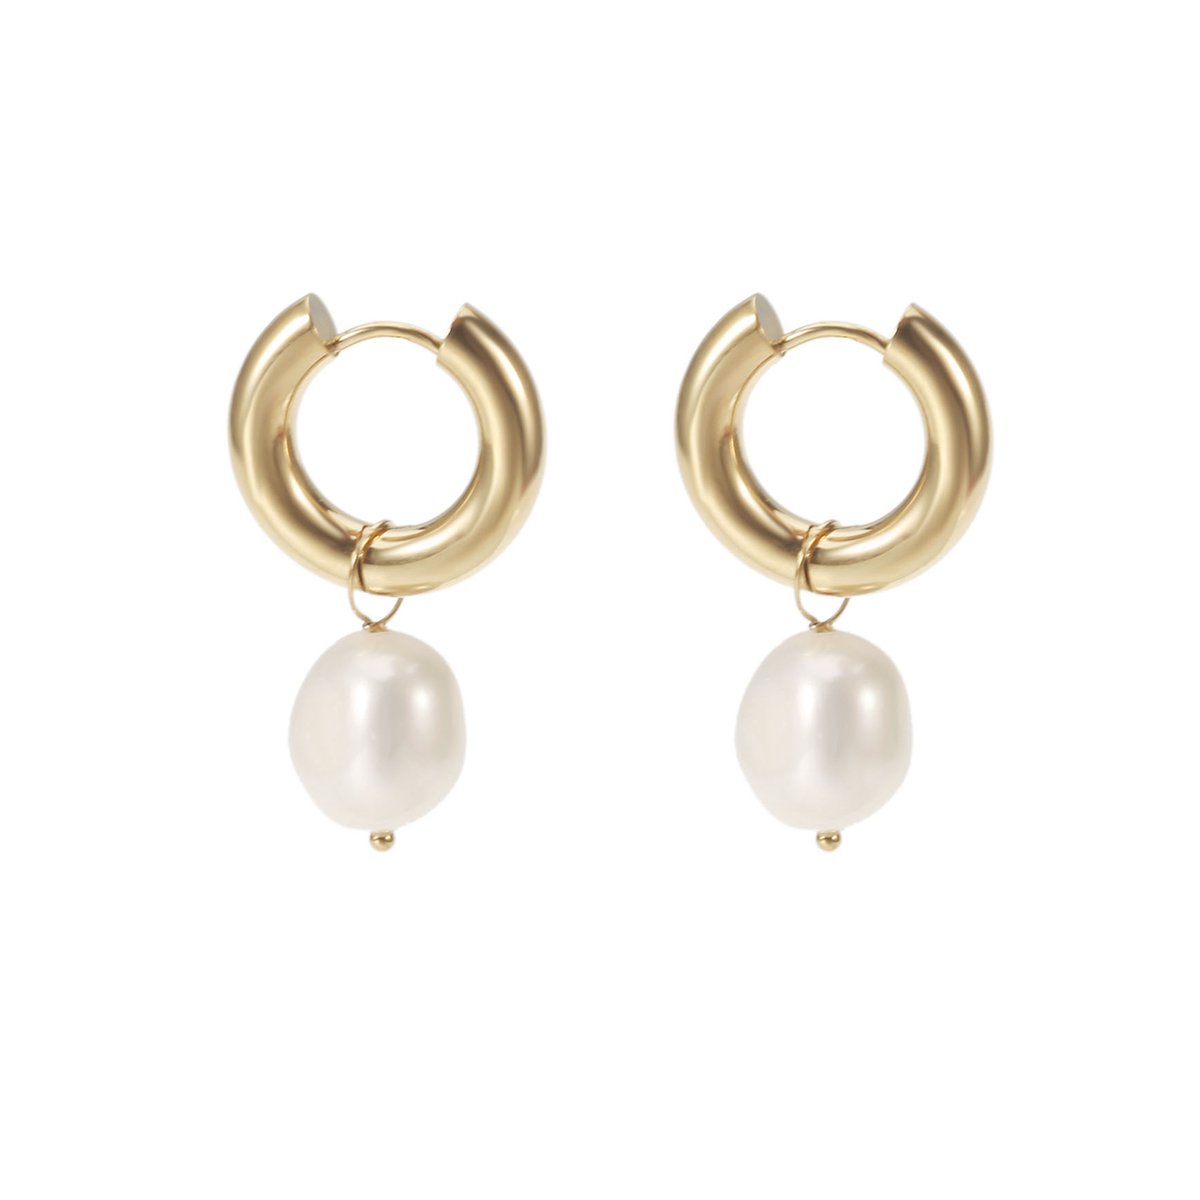 The Jewellery Club - Small pearl earrings gold - Oorbellen - Dames oorbellen - Parel oorbellen - Stainless steel - Hanger - 4 cm